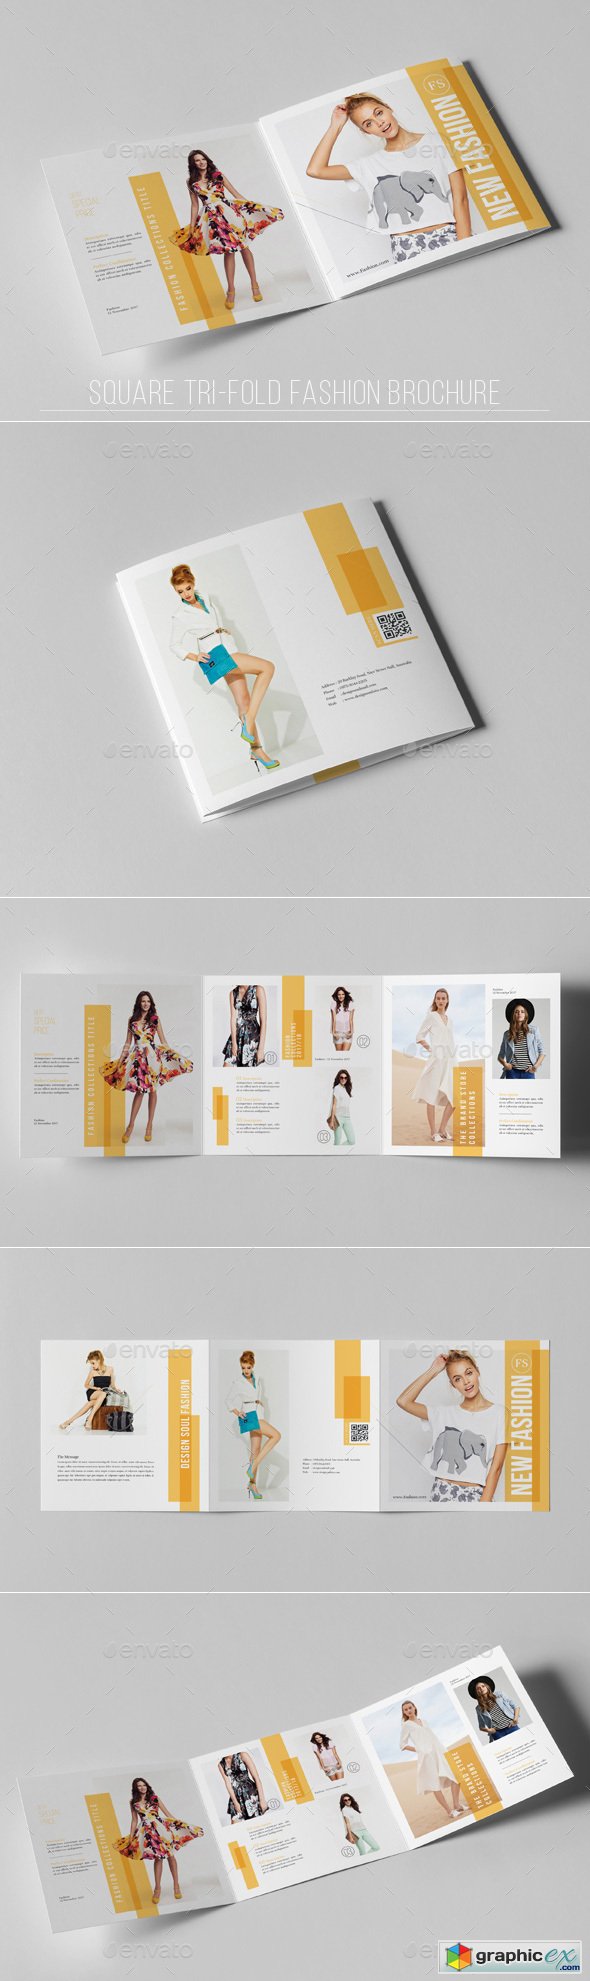 Square Tri-Fold Fashion Brochure